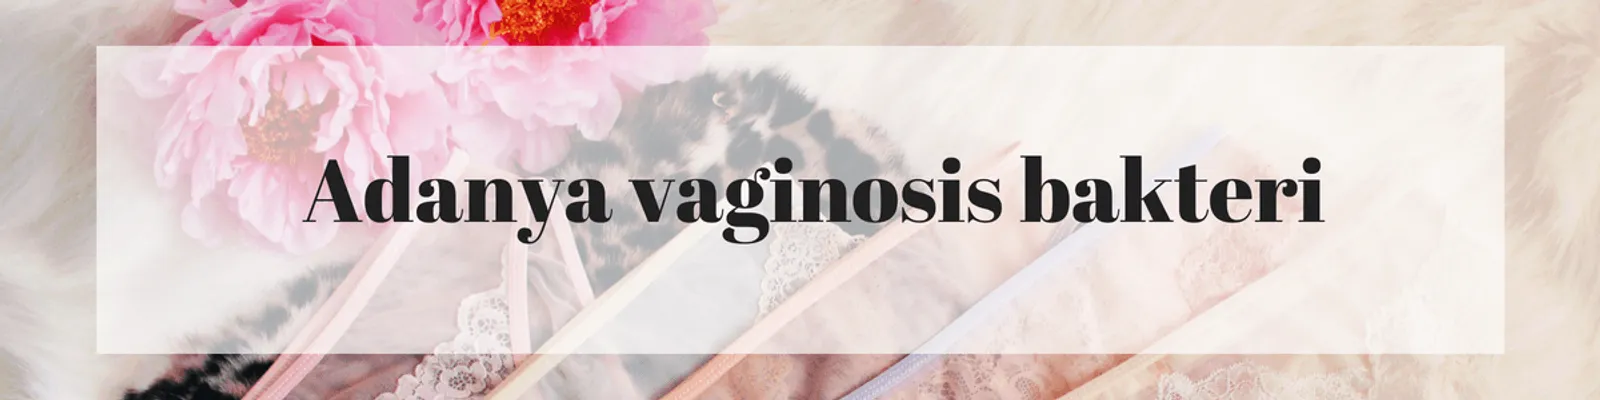 5 Penyebab Vagina Terasa Gatal yang Harus Kamu Ketahui